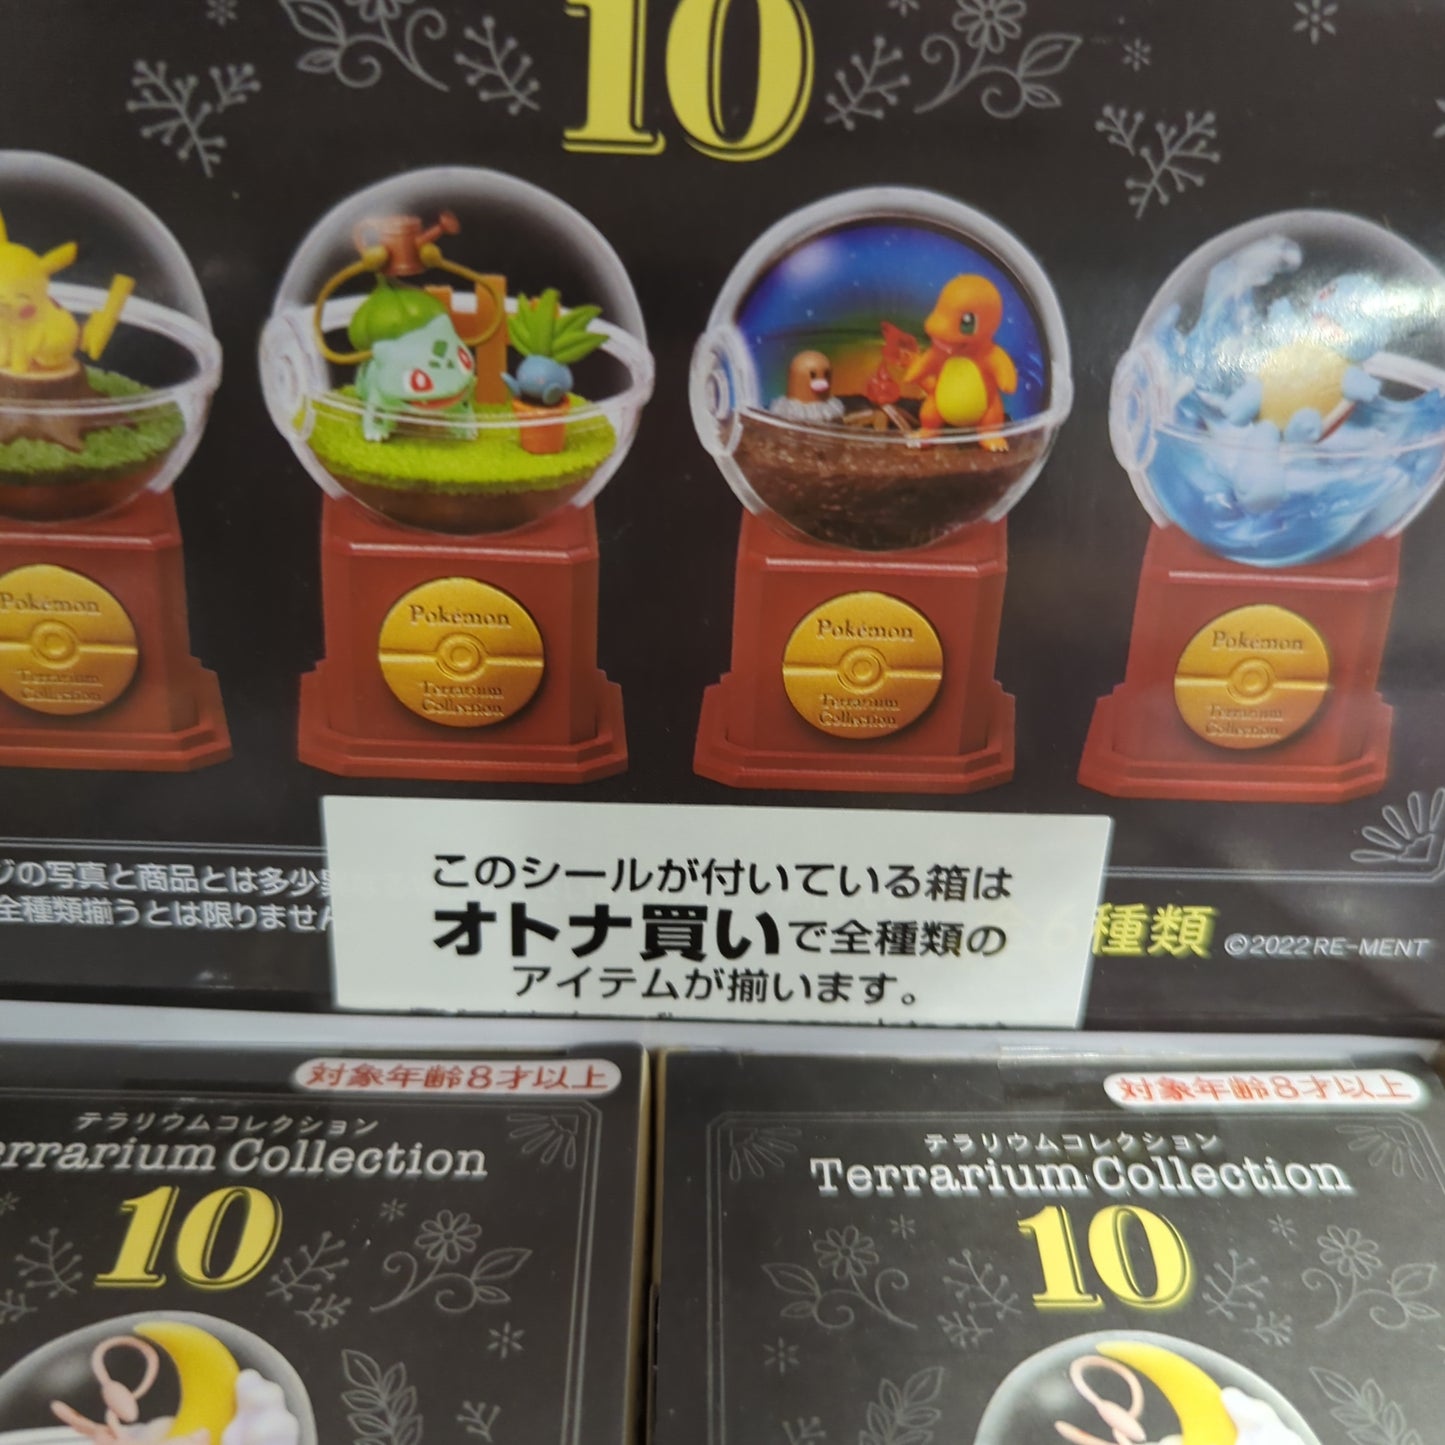 Pokemon Terrarium Collection Vol. 10 Boxed